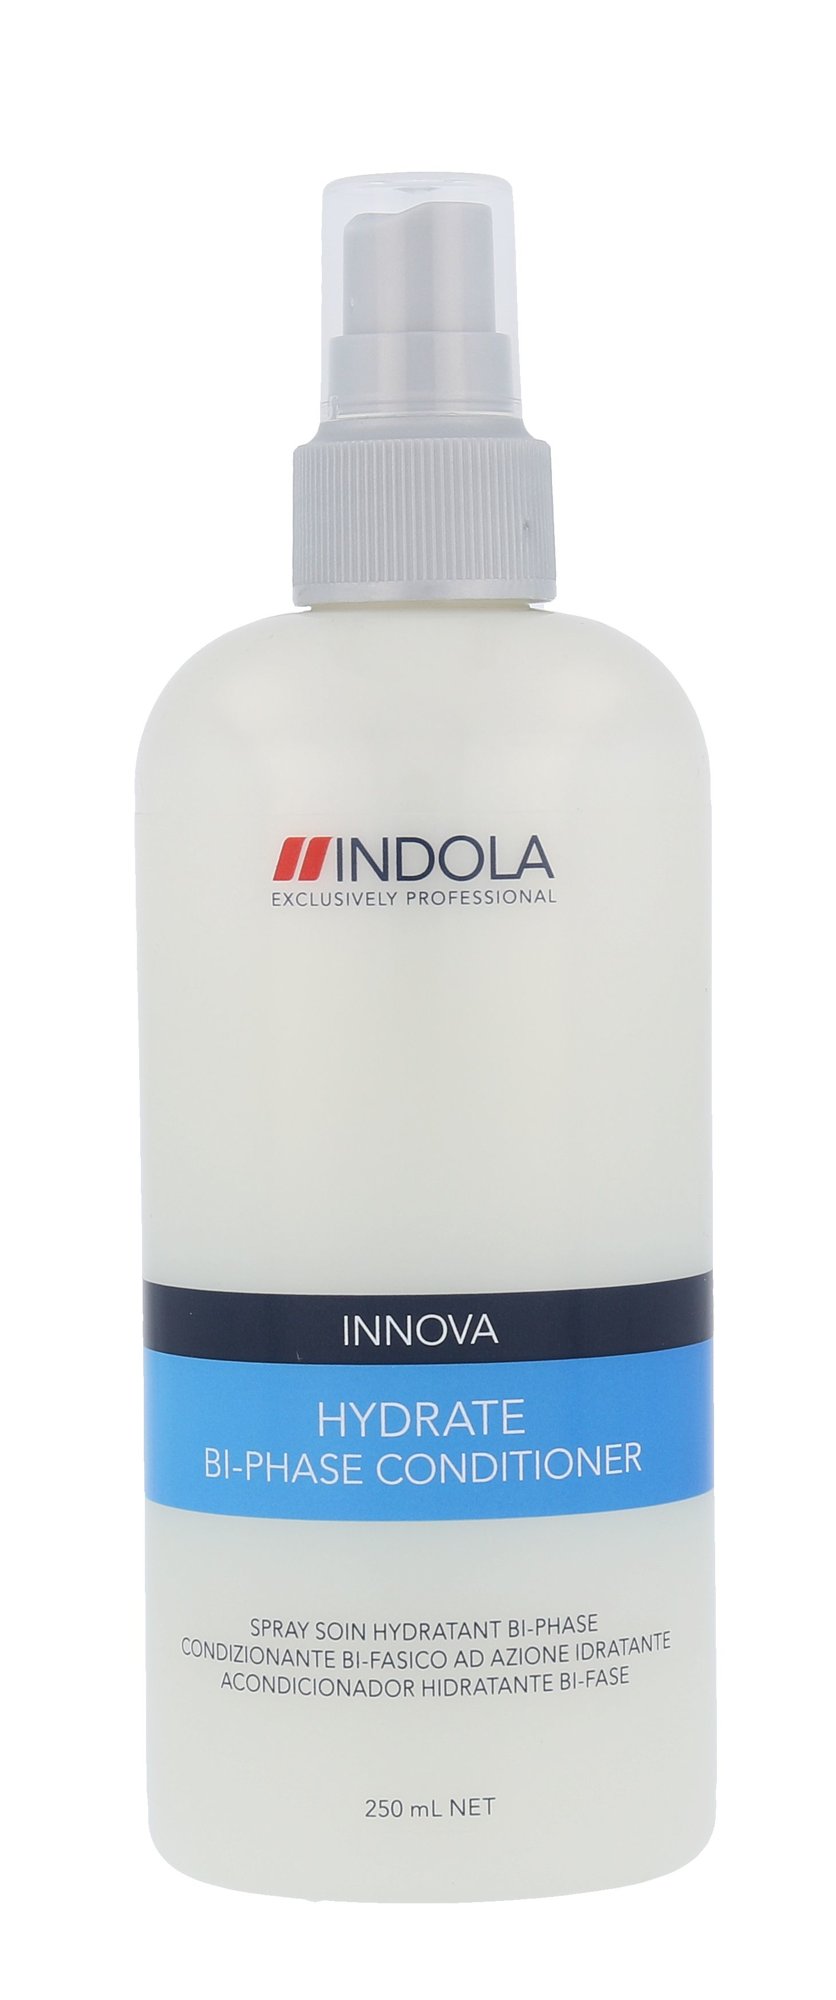 Indola Innova Hydrate Bi Phase 250ml kondicionierius